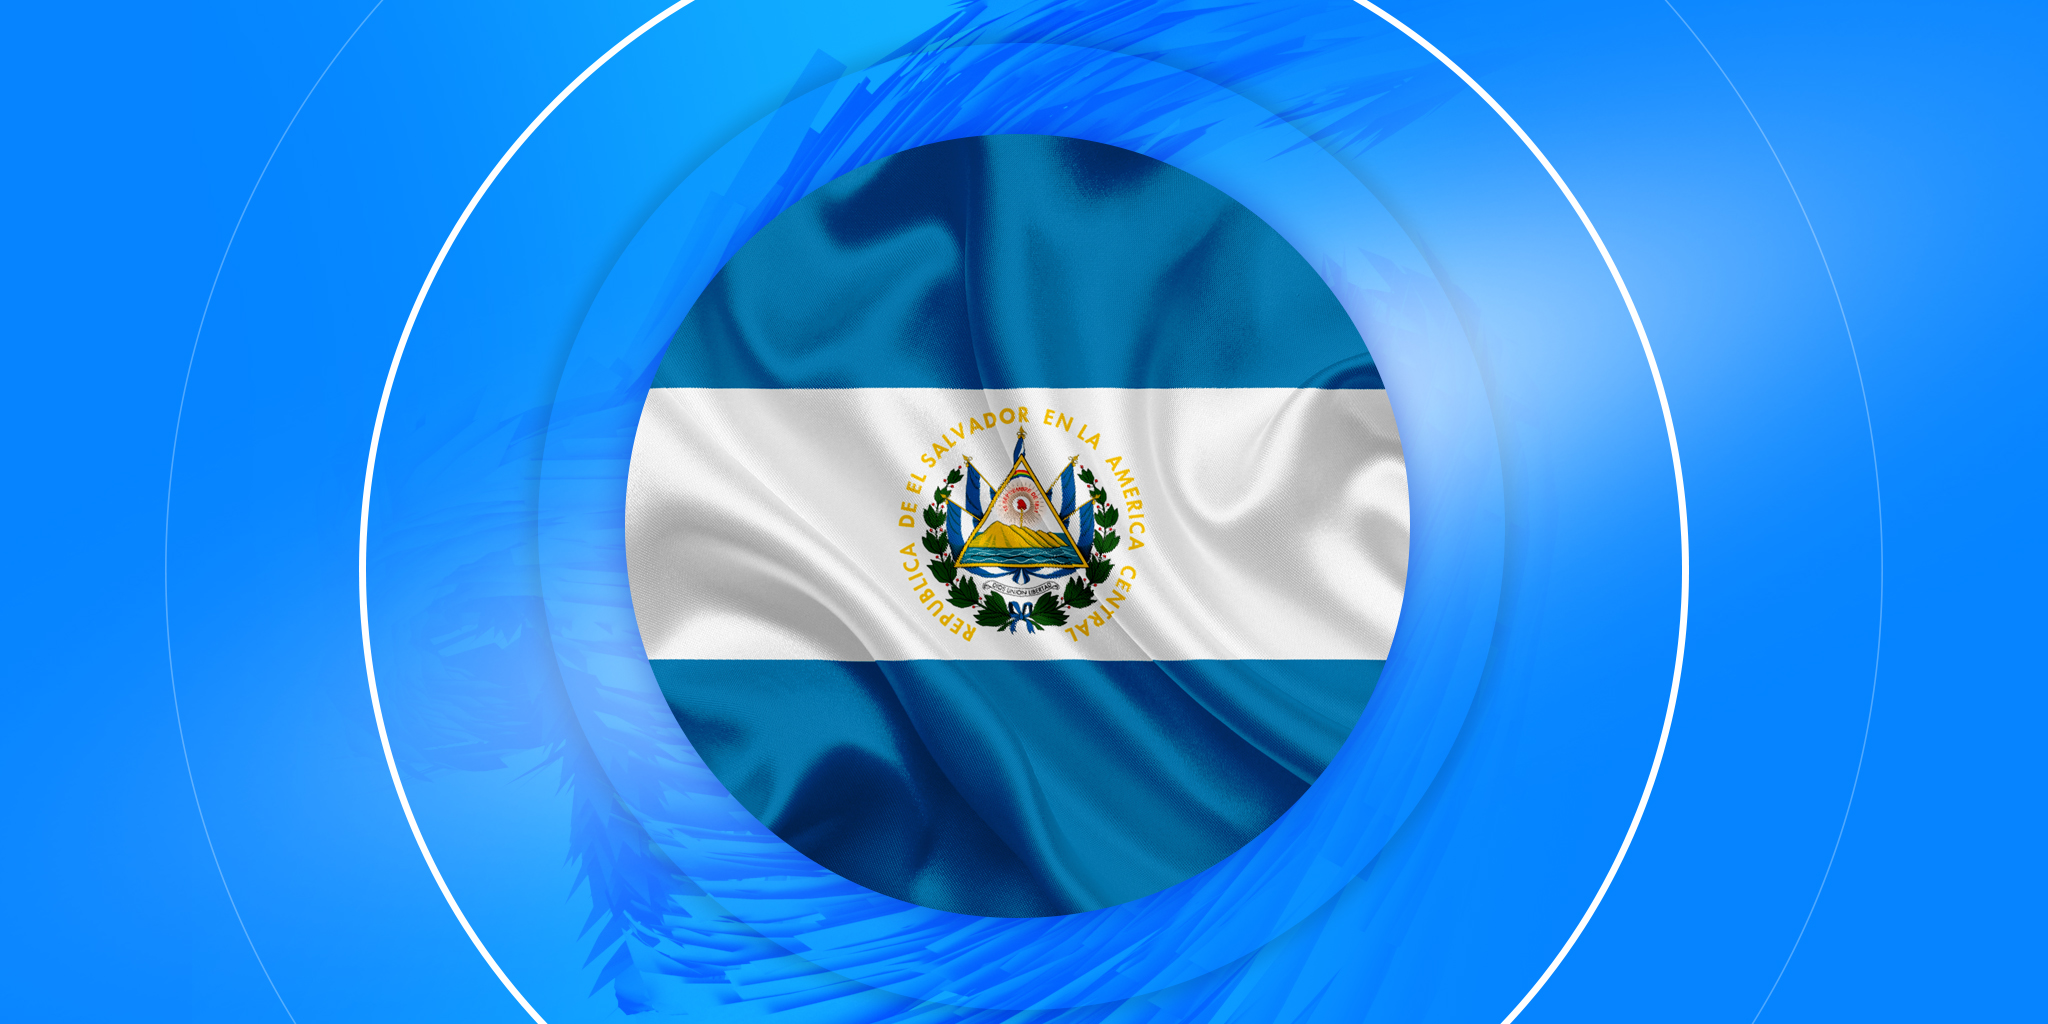 Will Bitcoin soon become a legal tender in El Salvador?